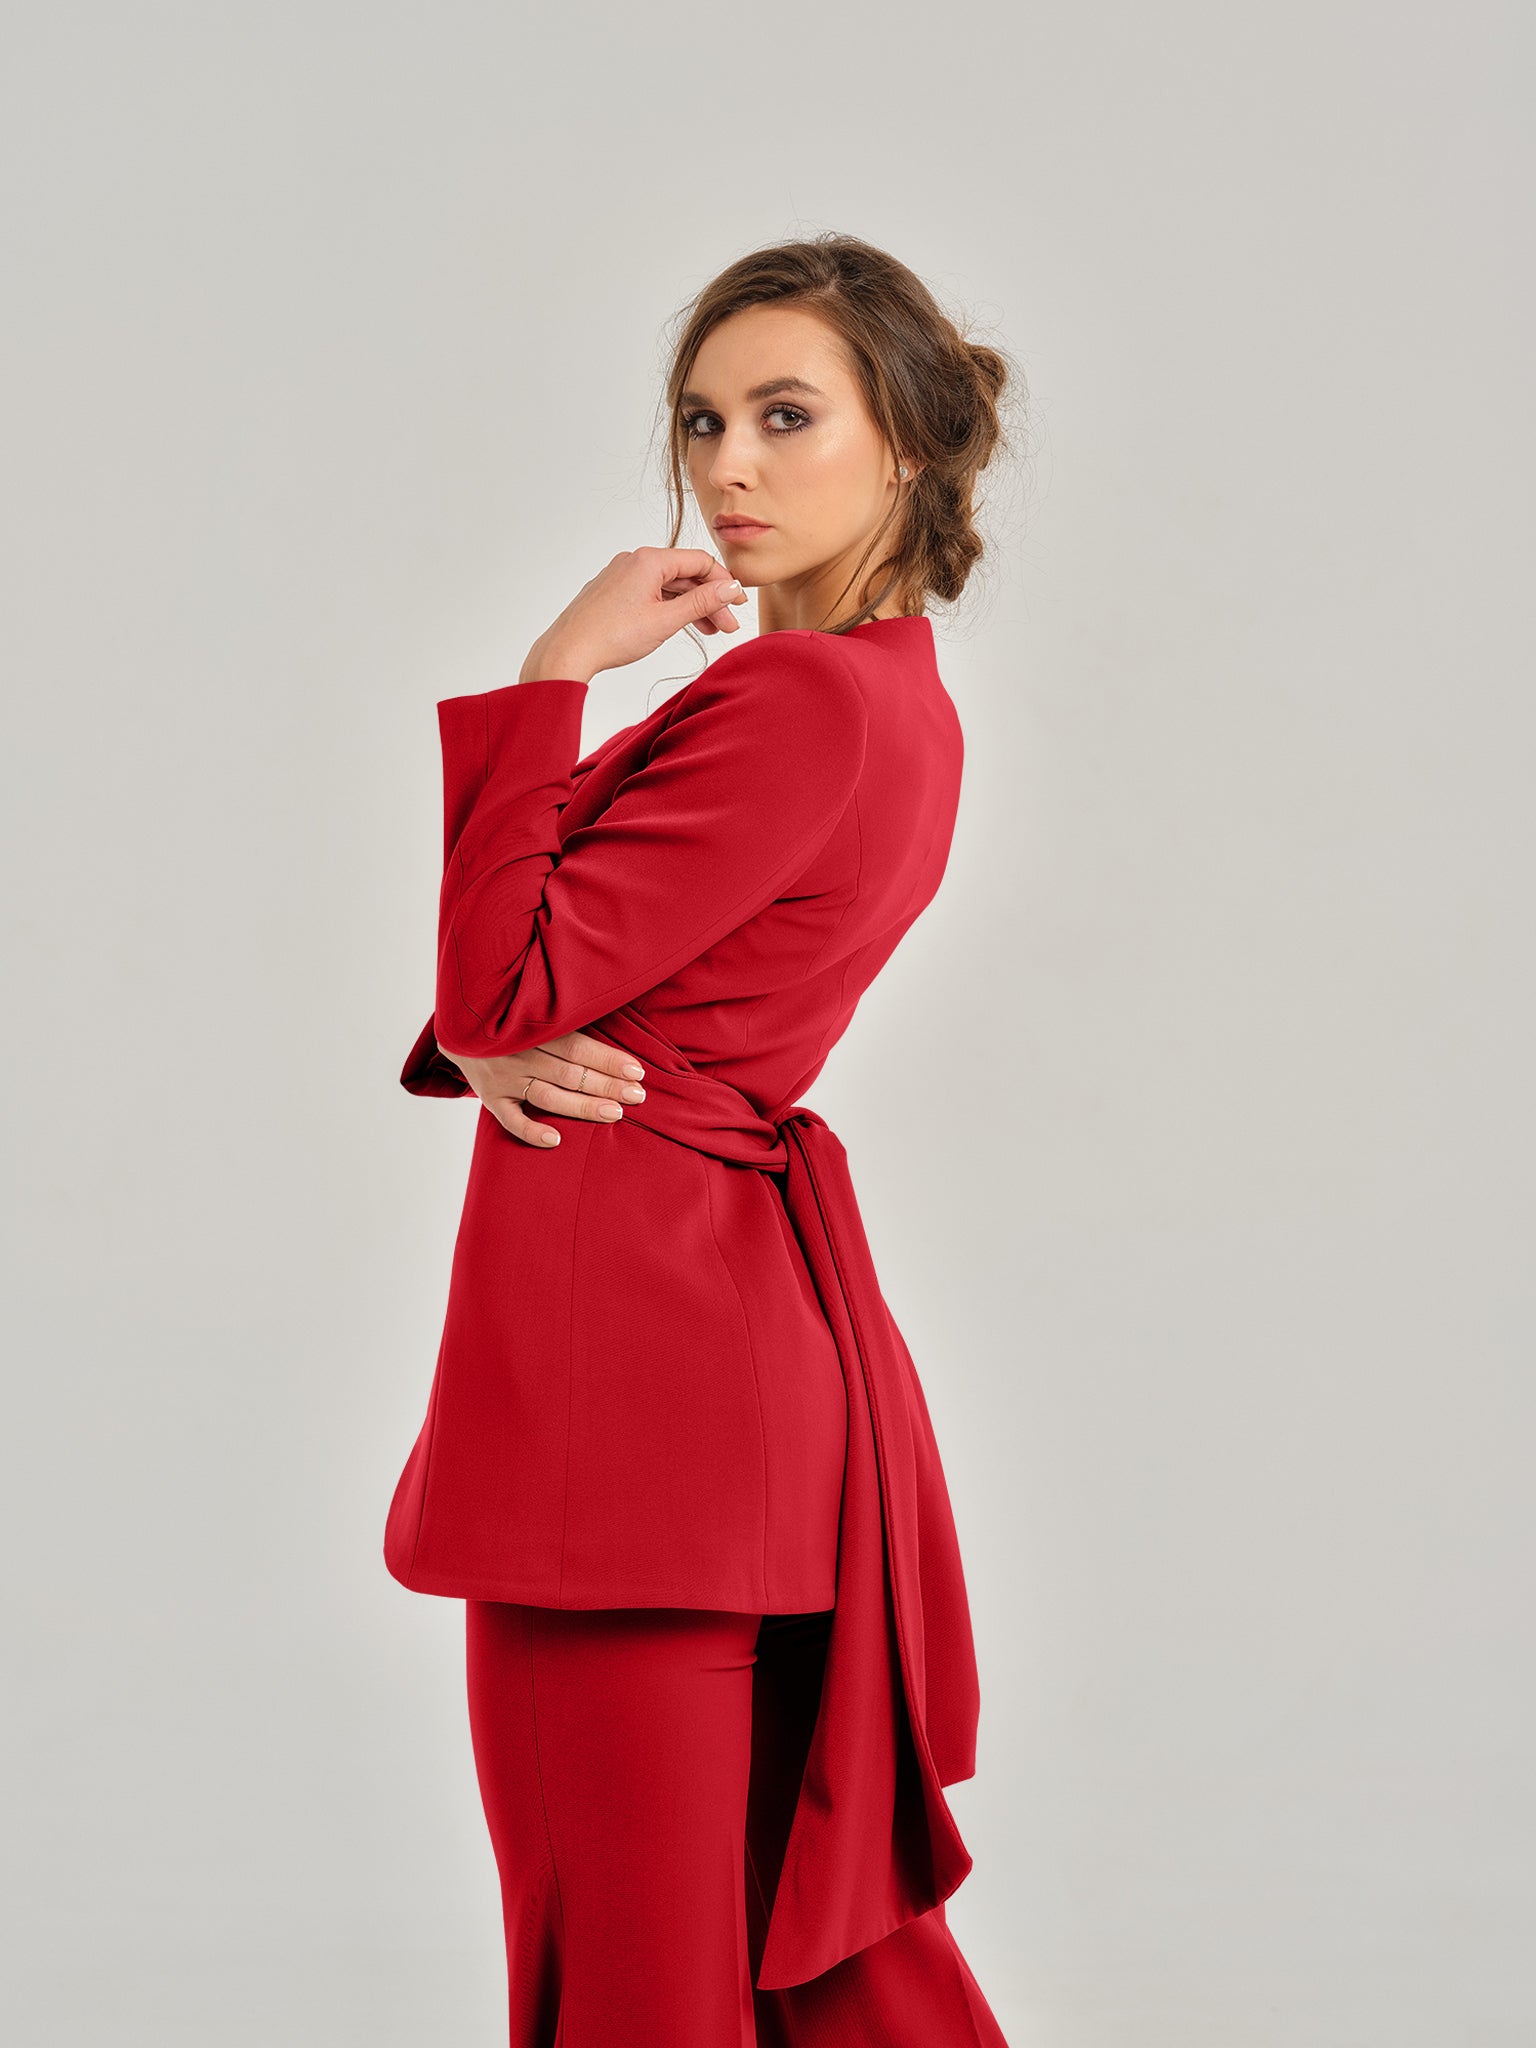 Fierce Red Cross-Wrap Statement Blazer by Tia Dorraine Women's Luxury Fashion Designer Clothing Brand